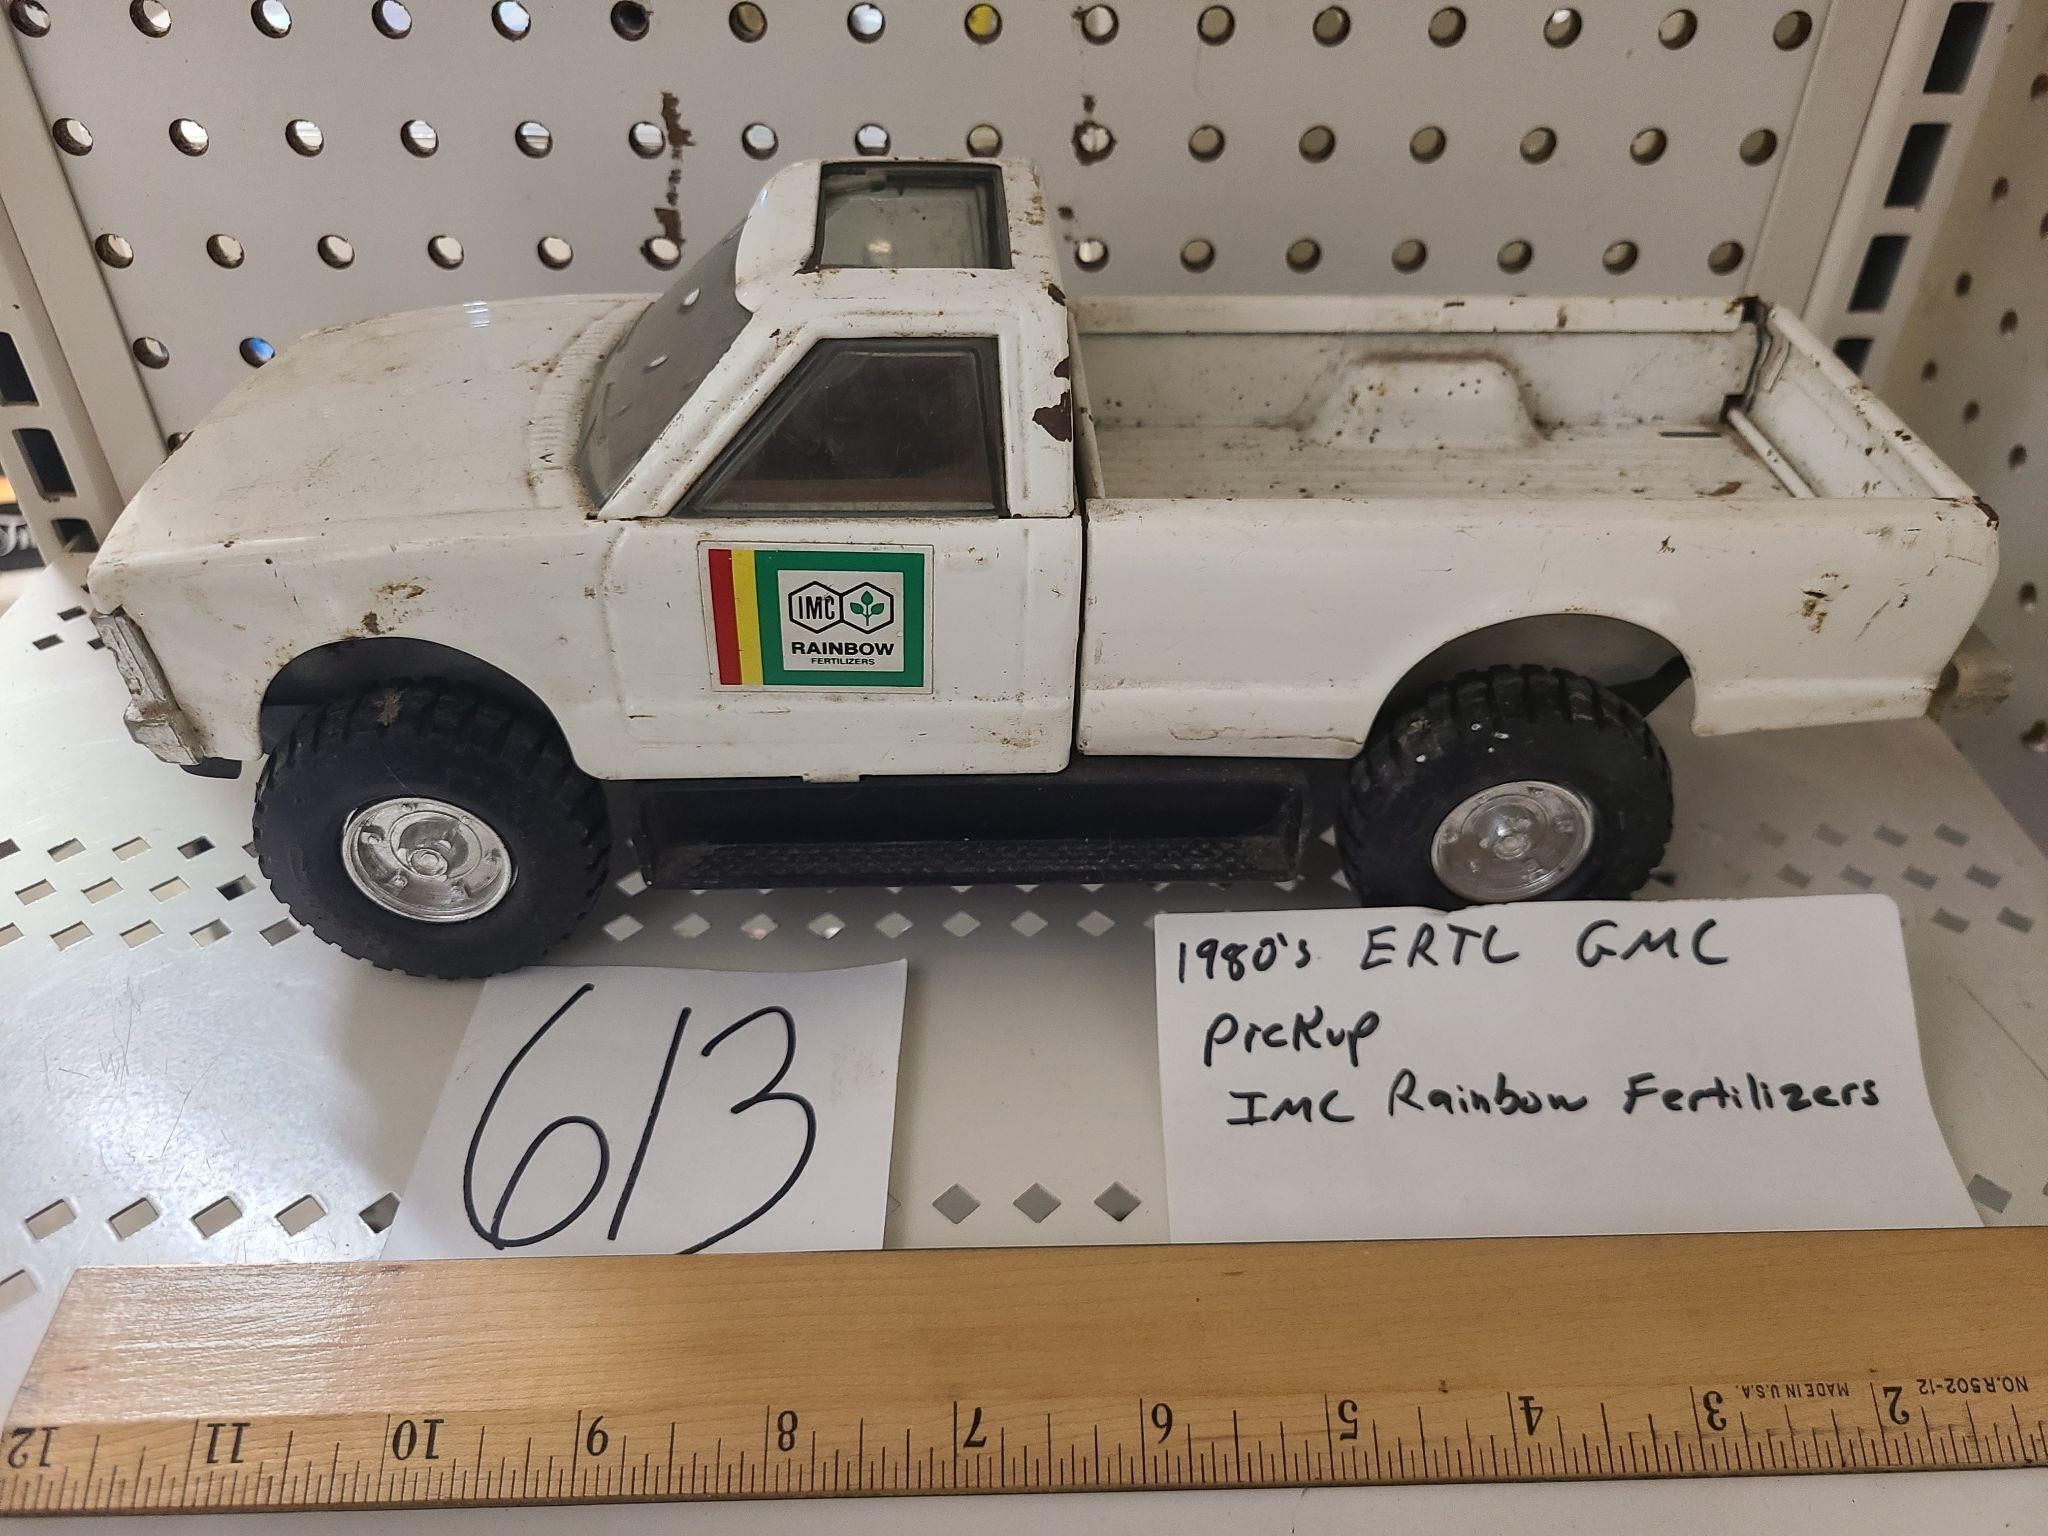 1980's Earl g m c pick up